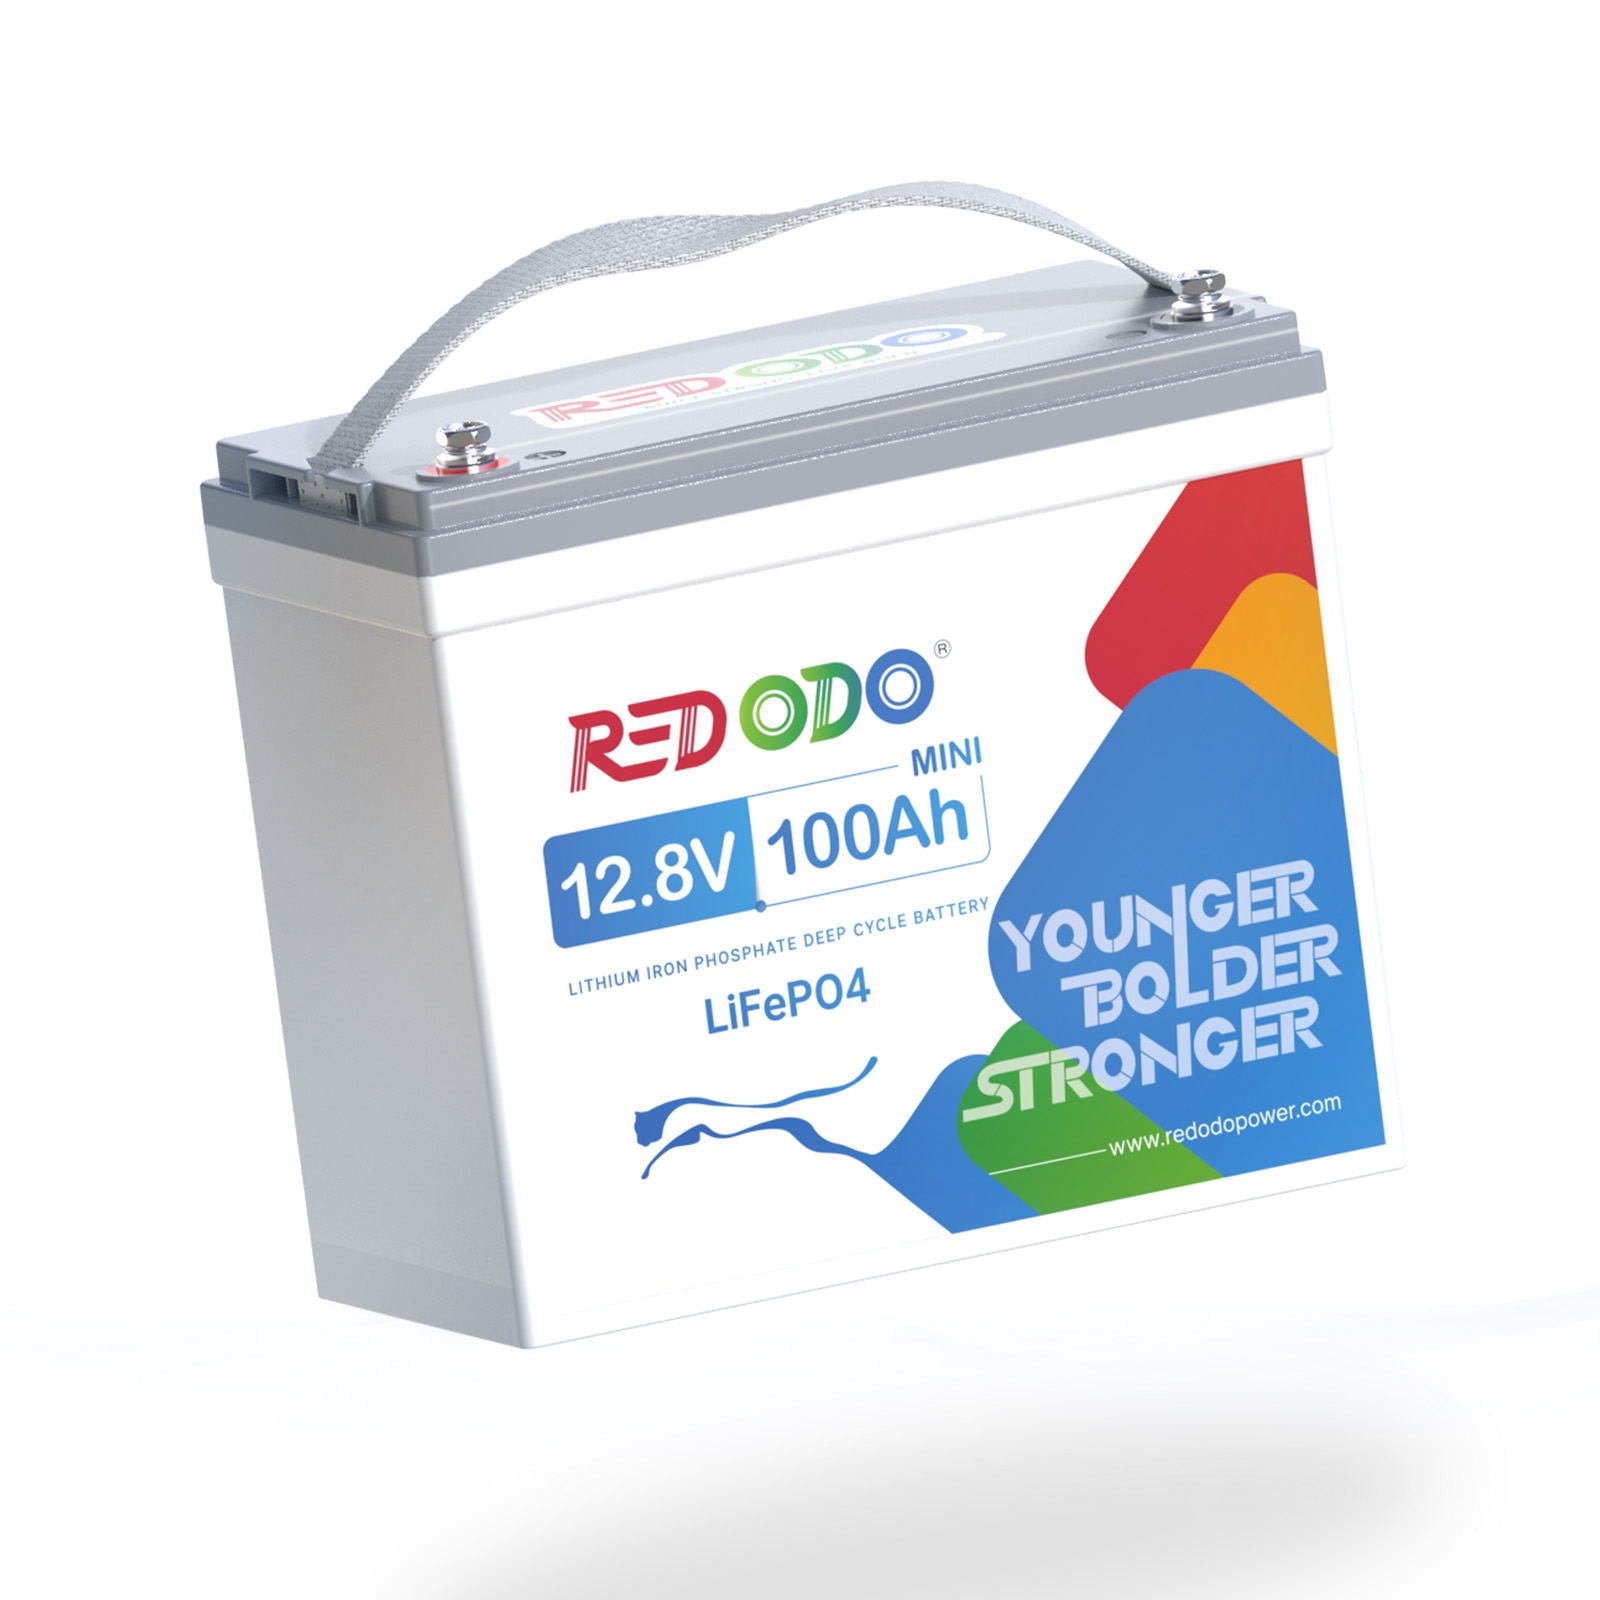 【Like New】Redodo 12V 100Ah Mini LiFePO4 battery | 1.28kWh & 1.28kW